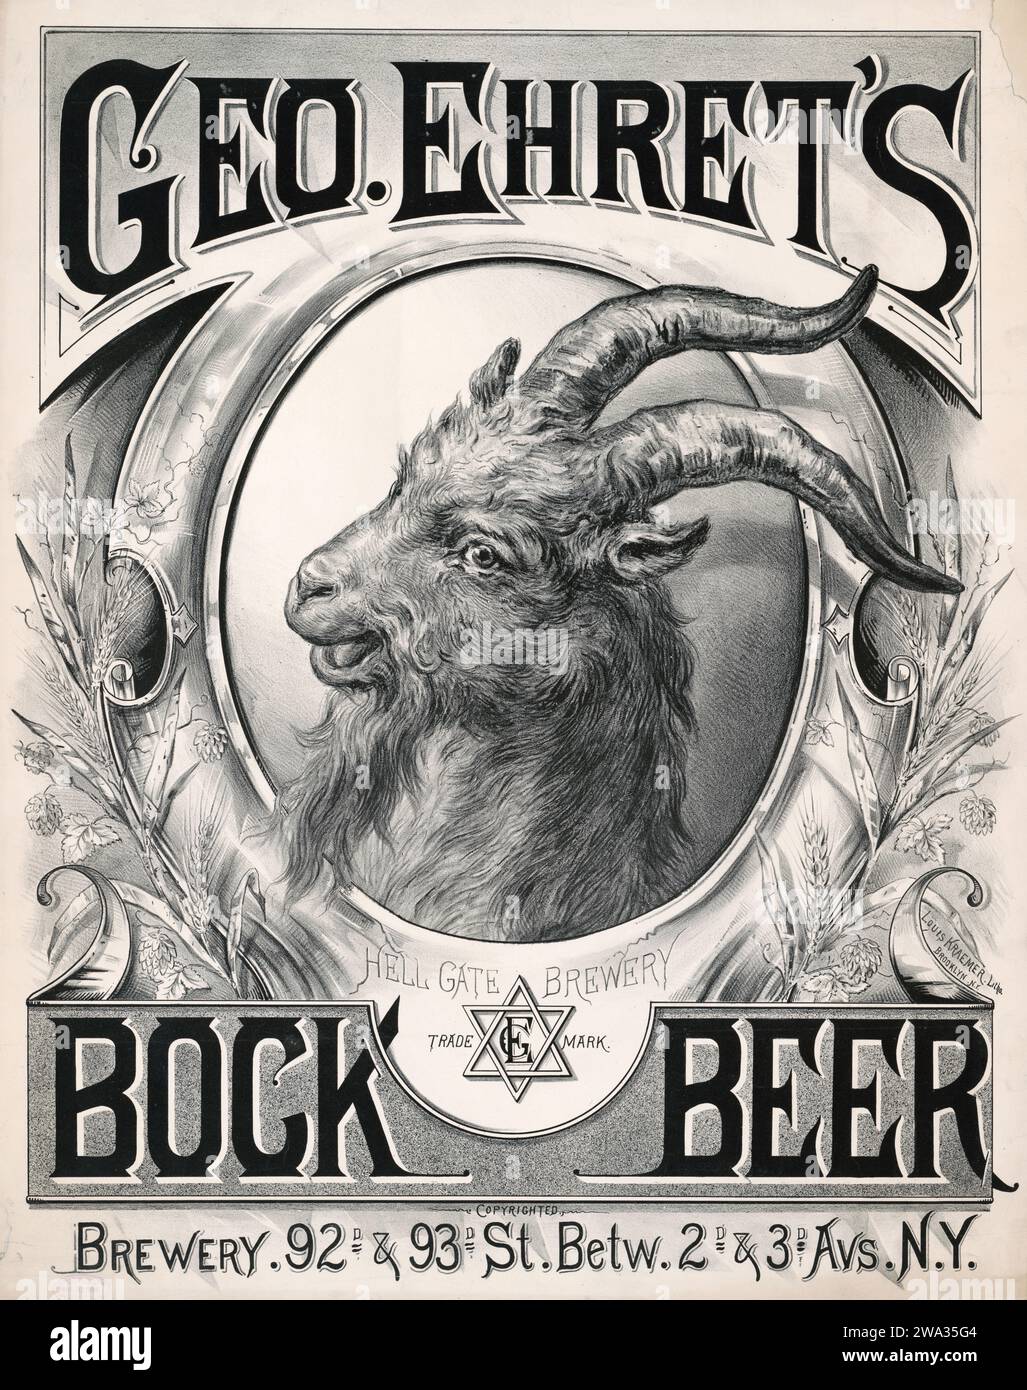 Geo. Ehret's Bock Beer, Hell Gate Brewery 1888 - Brooklyn, New York - poster pubblicitario per la birra bianca e nera Foto Stock